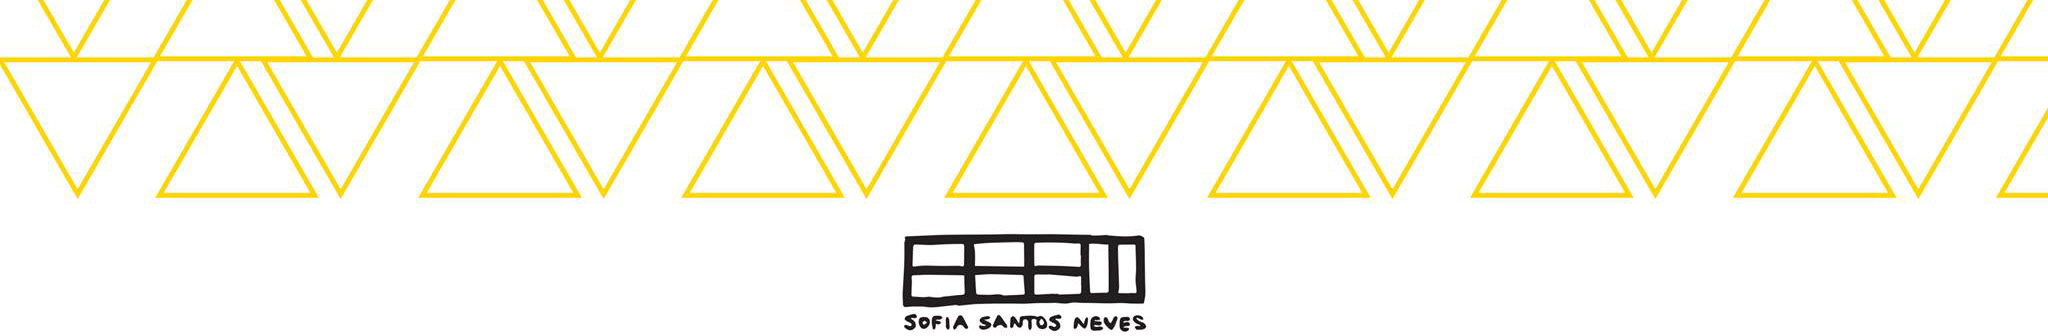 Sofia Santos Neves 的个人资料横幅